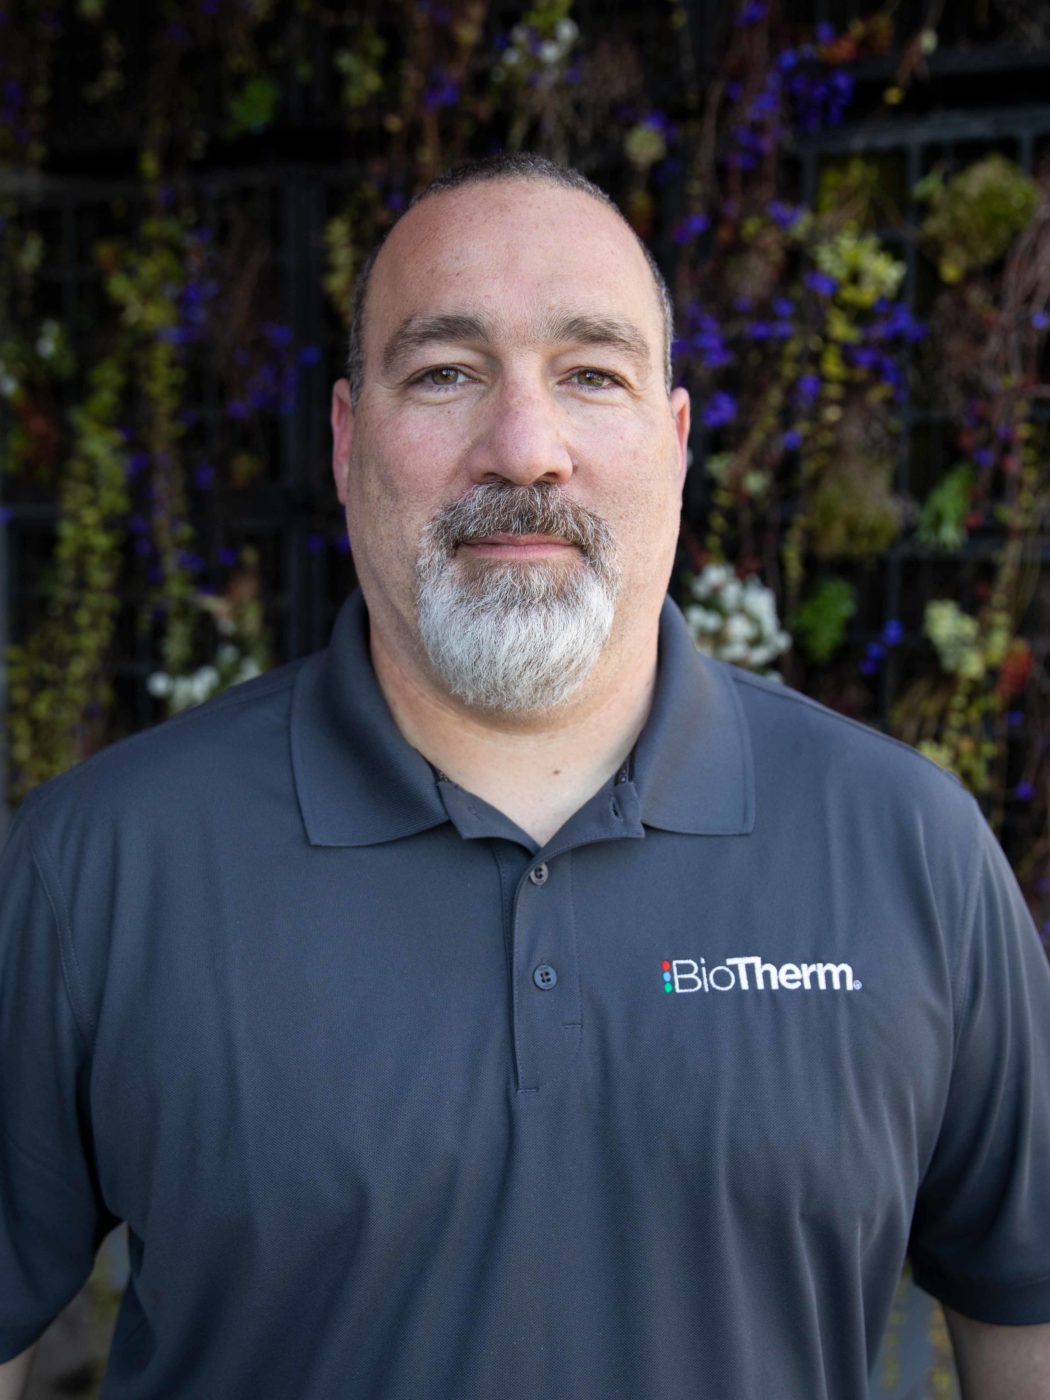 biotherm solutions staff member Jesus Martin